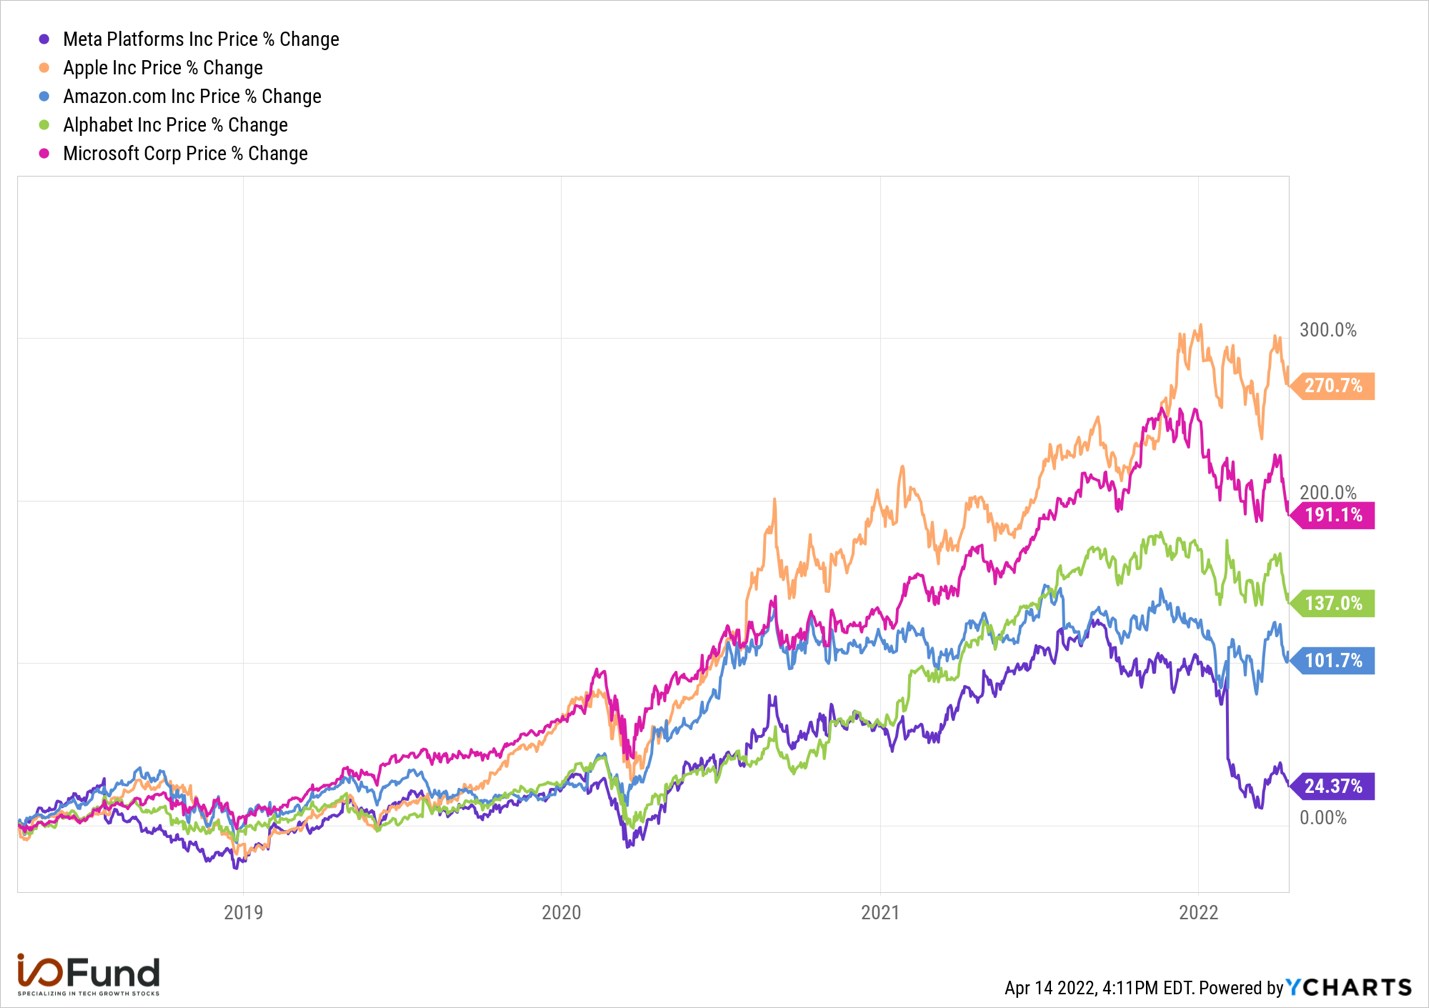 IO Fund Chart showing company price % change